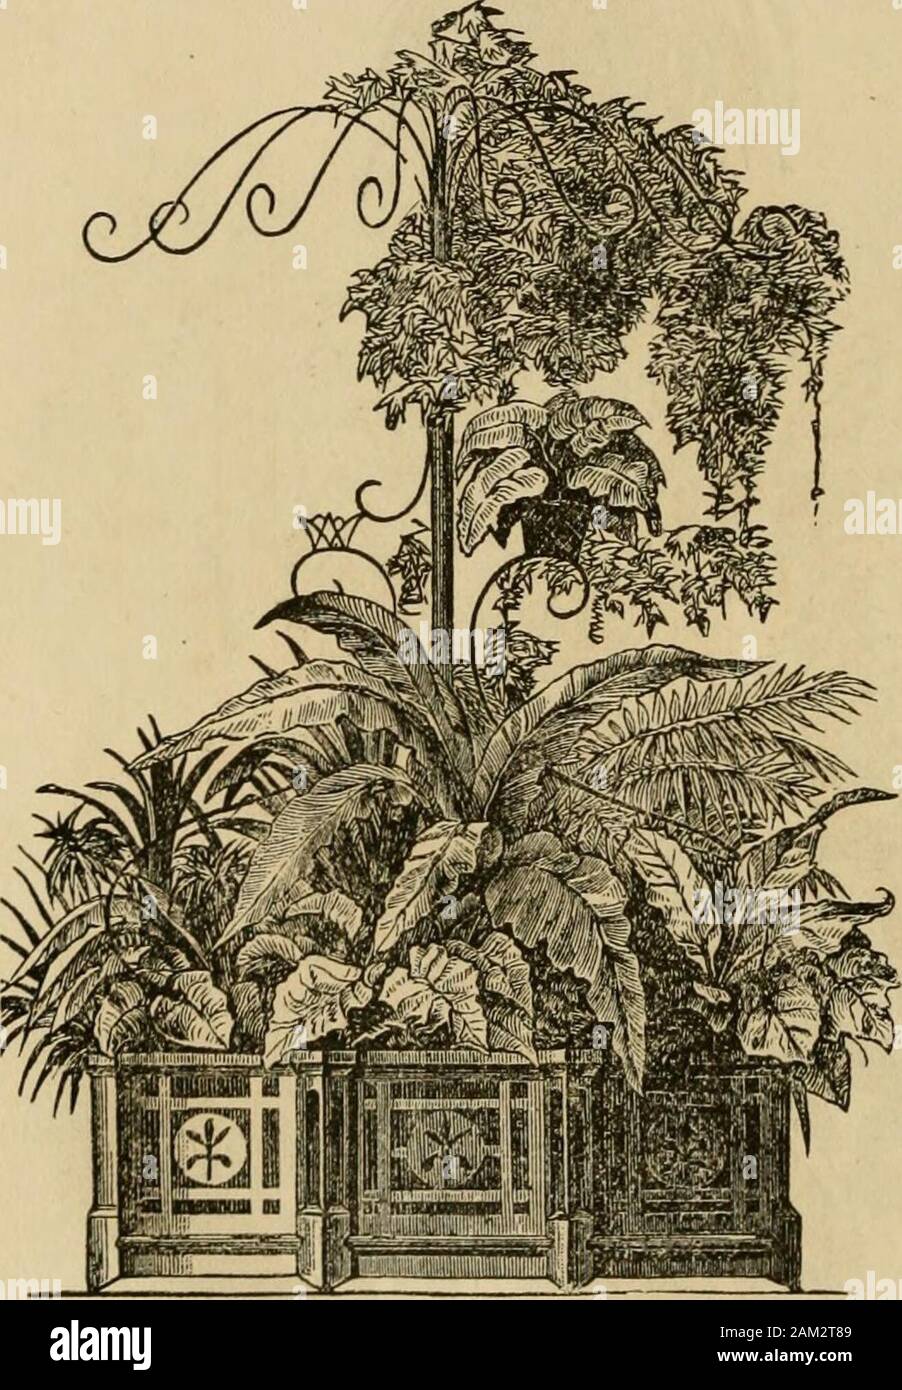 Window gardening : devoted specially to the culture of flowers and ornamental plants for indoor use and parlor decoration . ke: Several Dra-caenas, small Palms, Pan-danus utilis, Philodendrumpertusum, Alocasia macror-rhiza, fol .var., A. Jenningii,A. metallica, A. arborea,Croton pictum, and C. va-riegatum, and differentspecies of Maranta, Ama-ryllis Tessani, A. solandrge-flora, A. vittata and A.regina, Vallota purpurea,Pitcairnea punicea, Aech-maja fulgens, Tillandsiafarinosa, pyramidalis andamoena. A composition of plantswith thick and fleshy leavesFig. n. Flower Box aud tree trellis. and bra Stock Photo